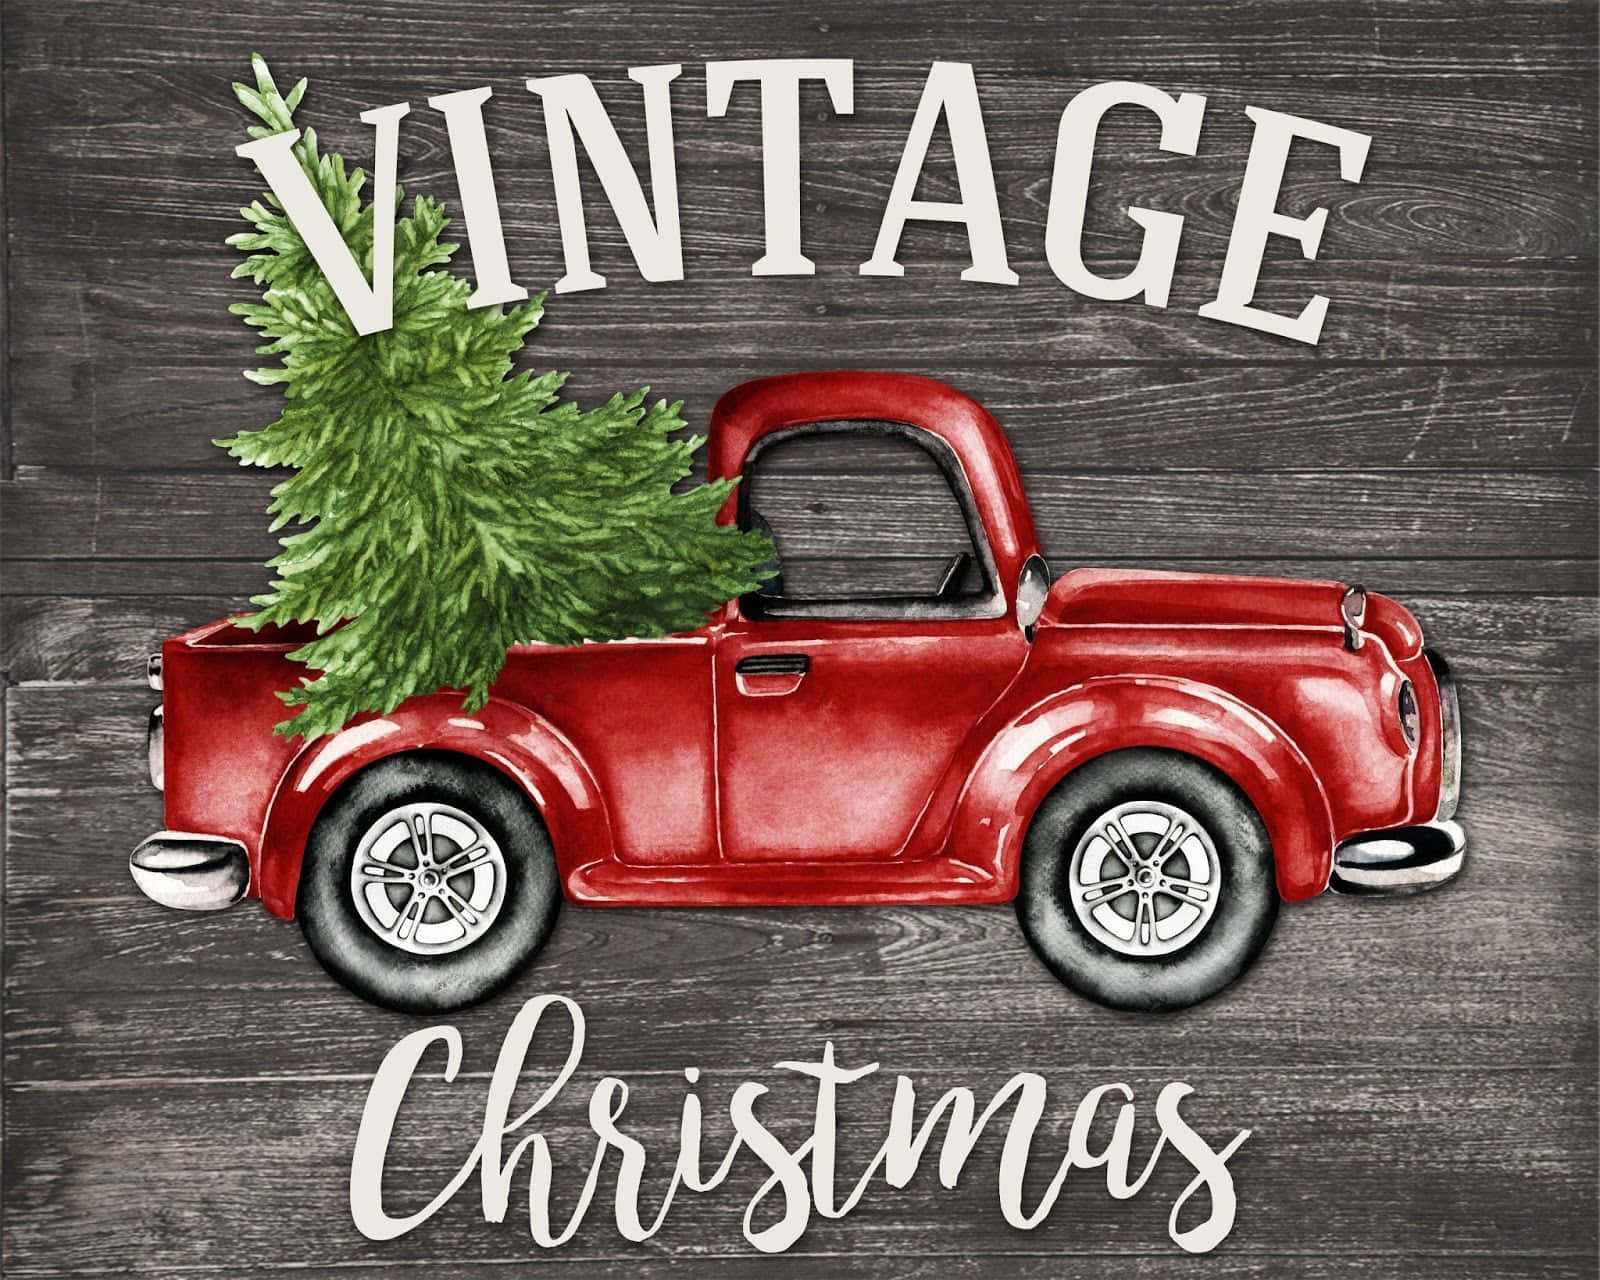 A vintage truck awaits Christmas morning Wallpaper